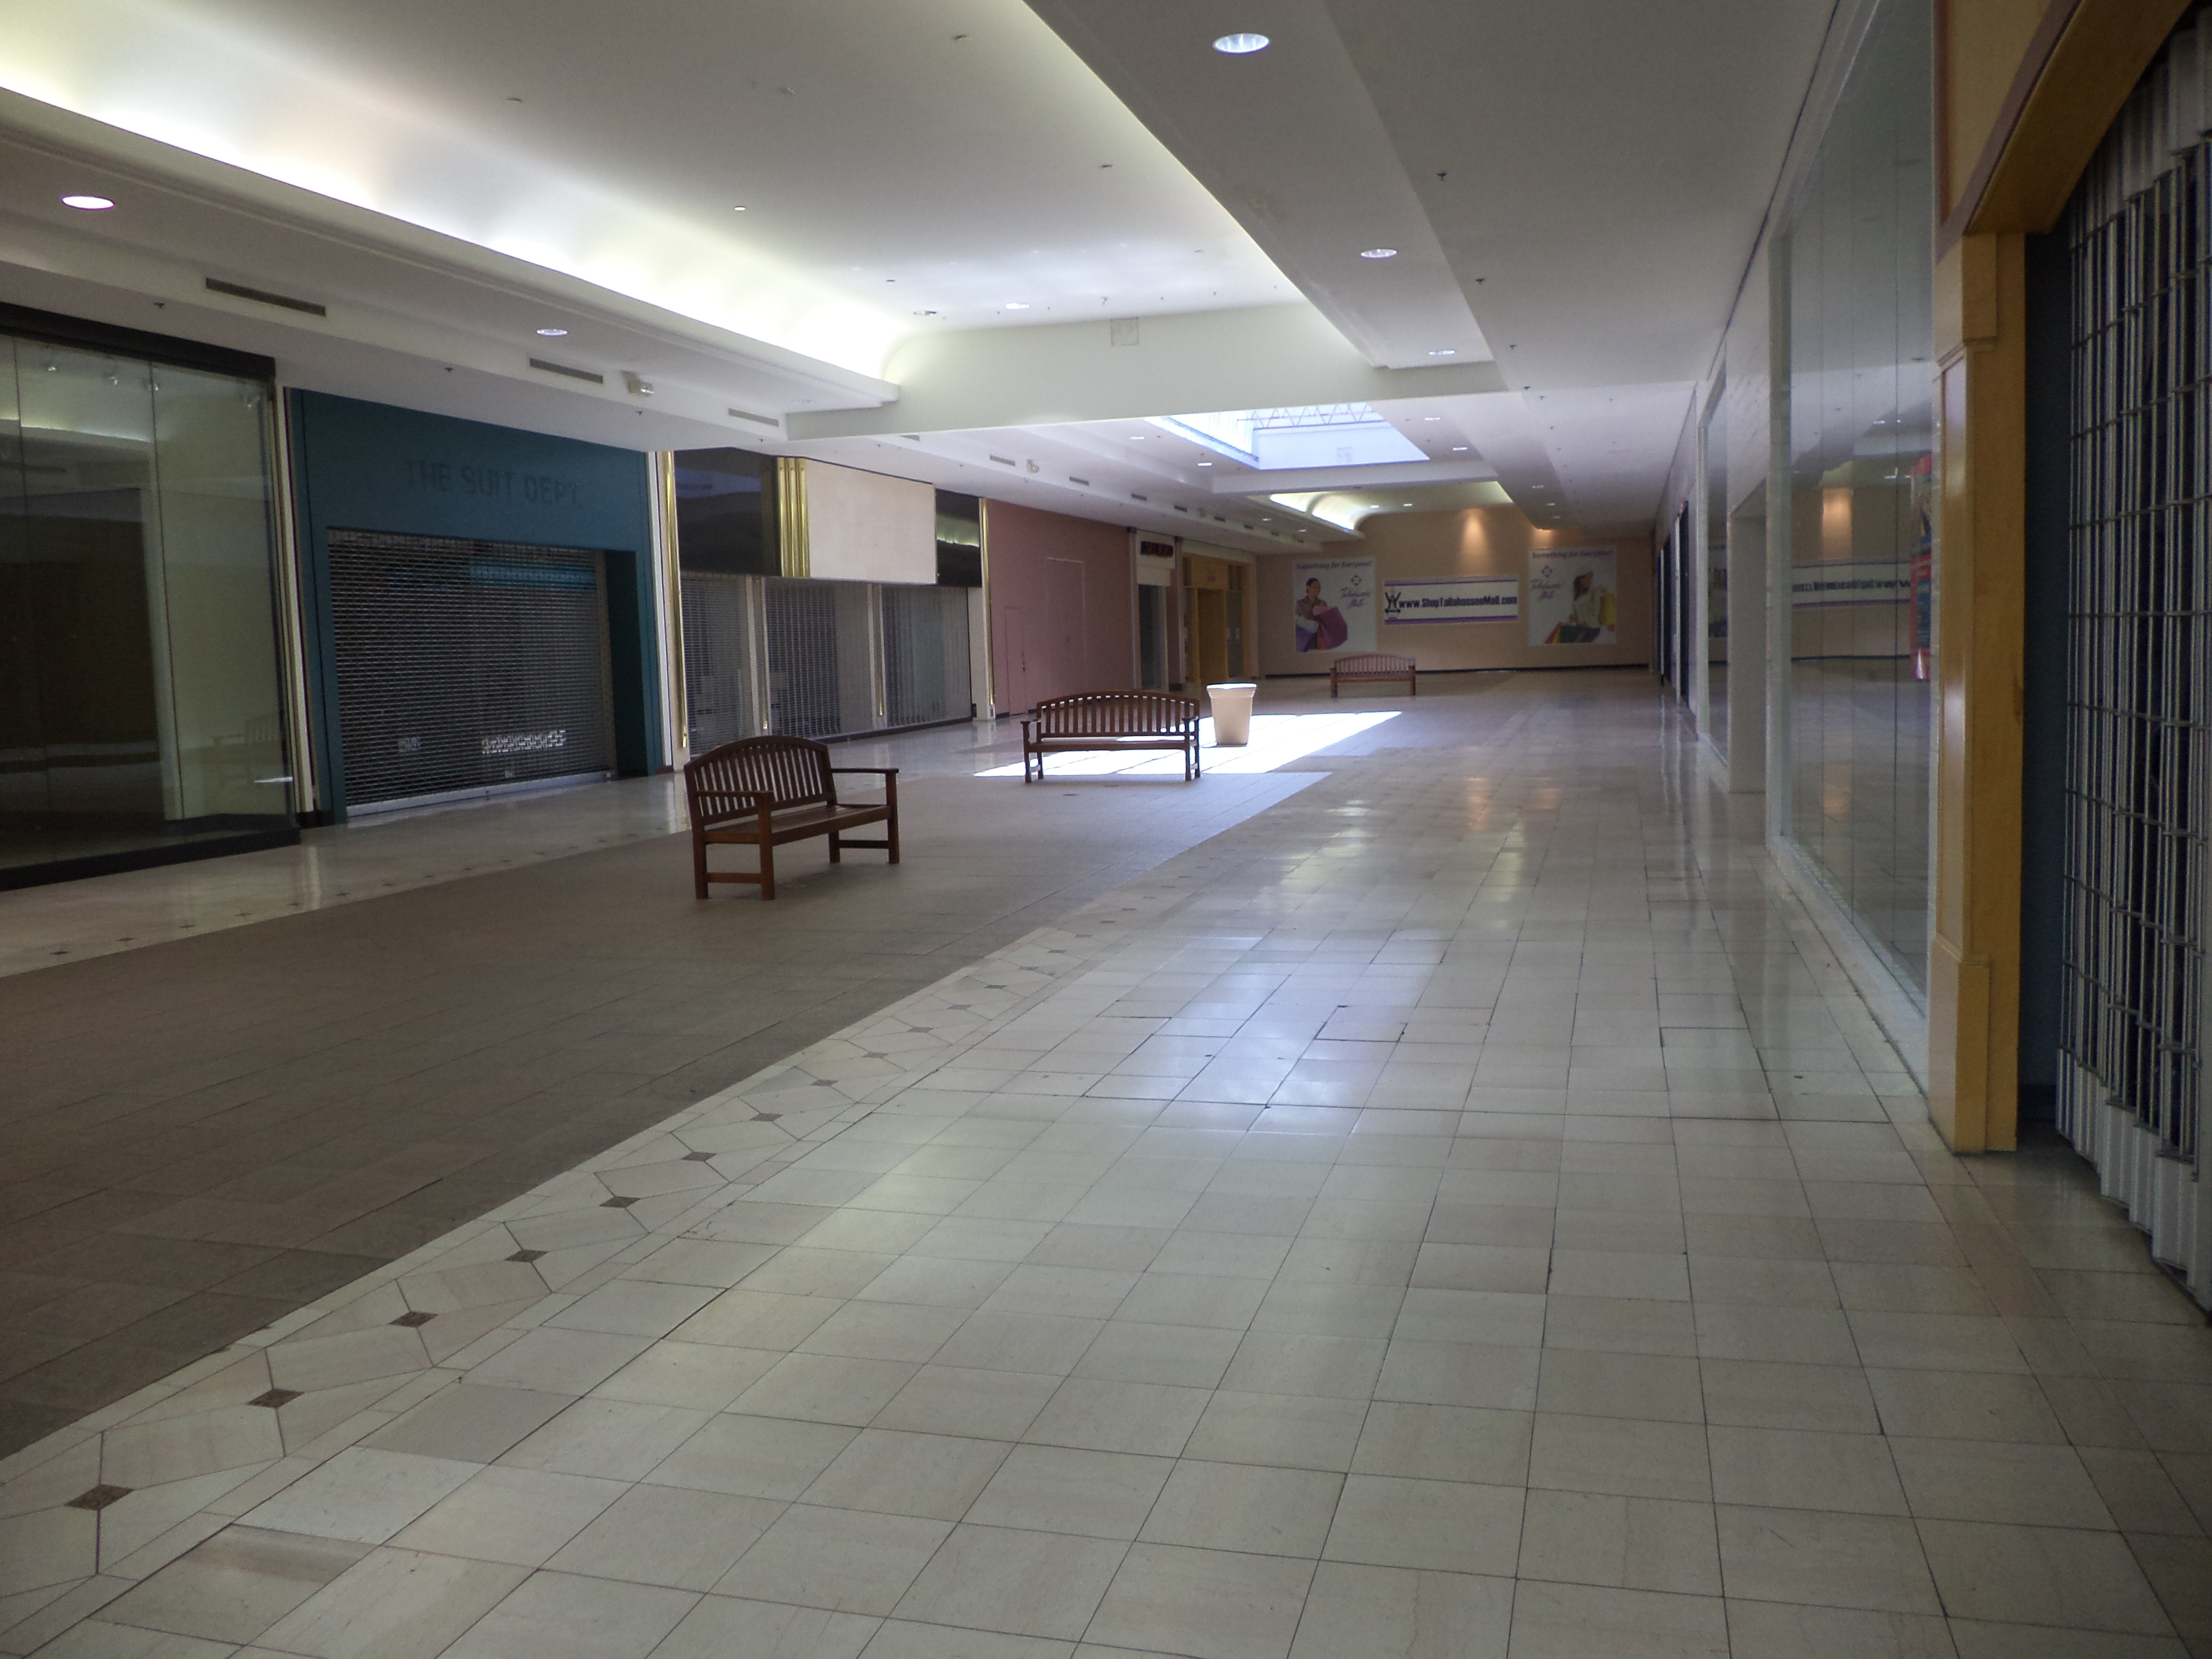 File:Empty Hallway, Tallahassee Mall.JPG - Wikimedia Commons